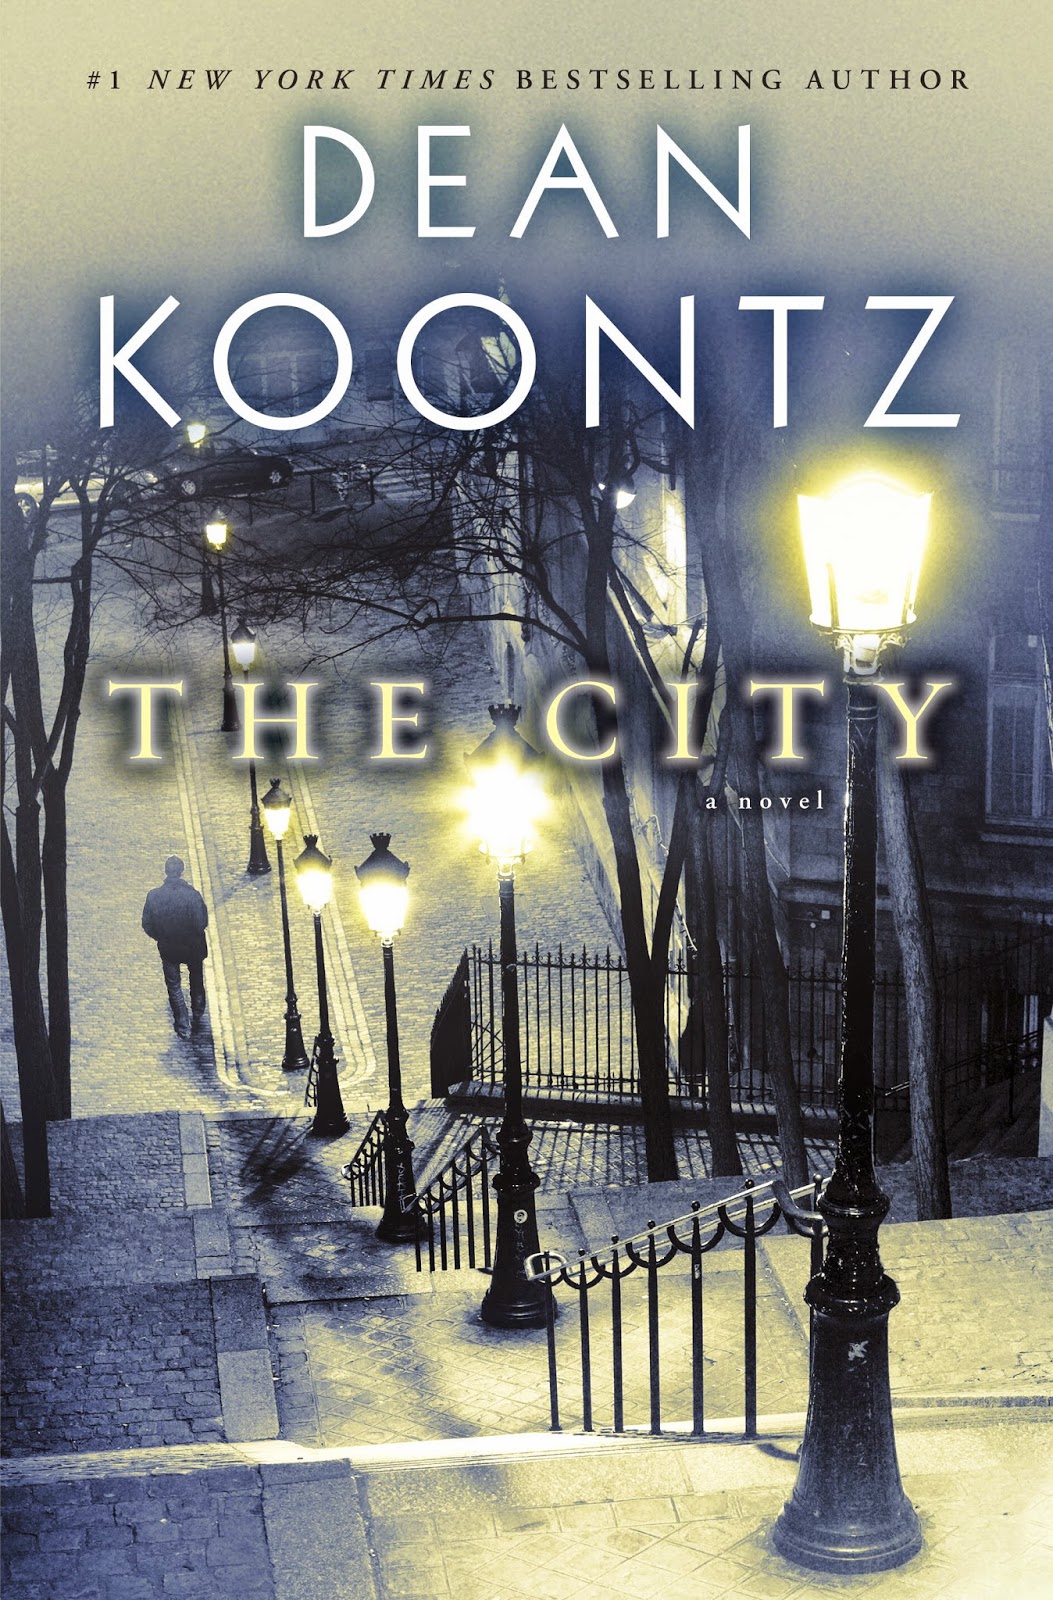 The City: /A Novel {Dean Koontz} | #giveaway #freebooks #bookclub #randomhouse #sponsored